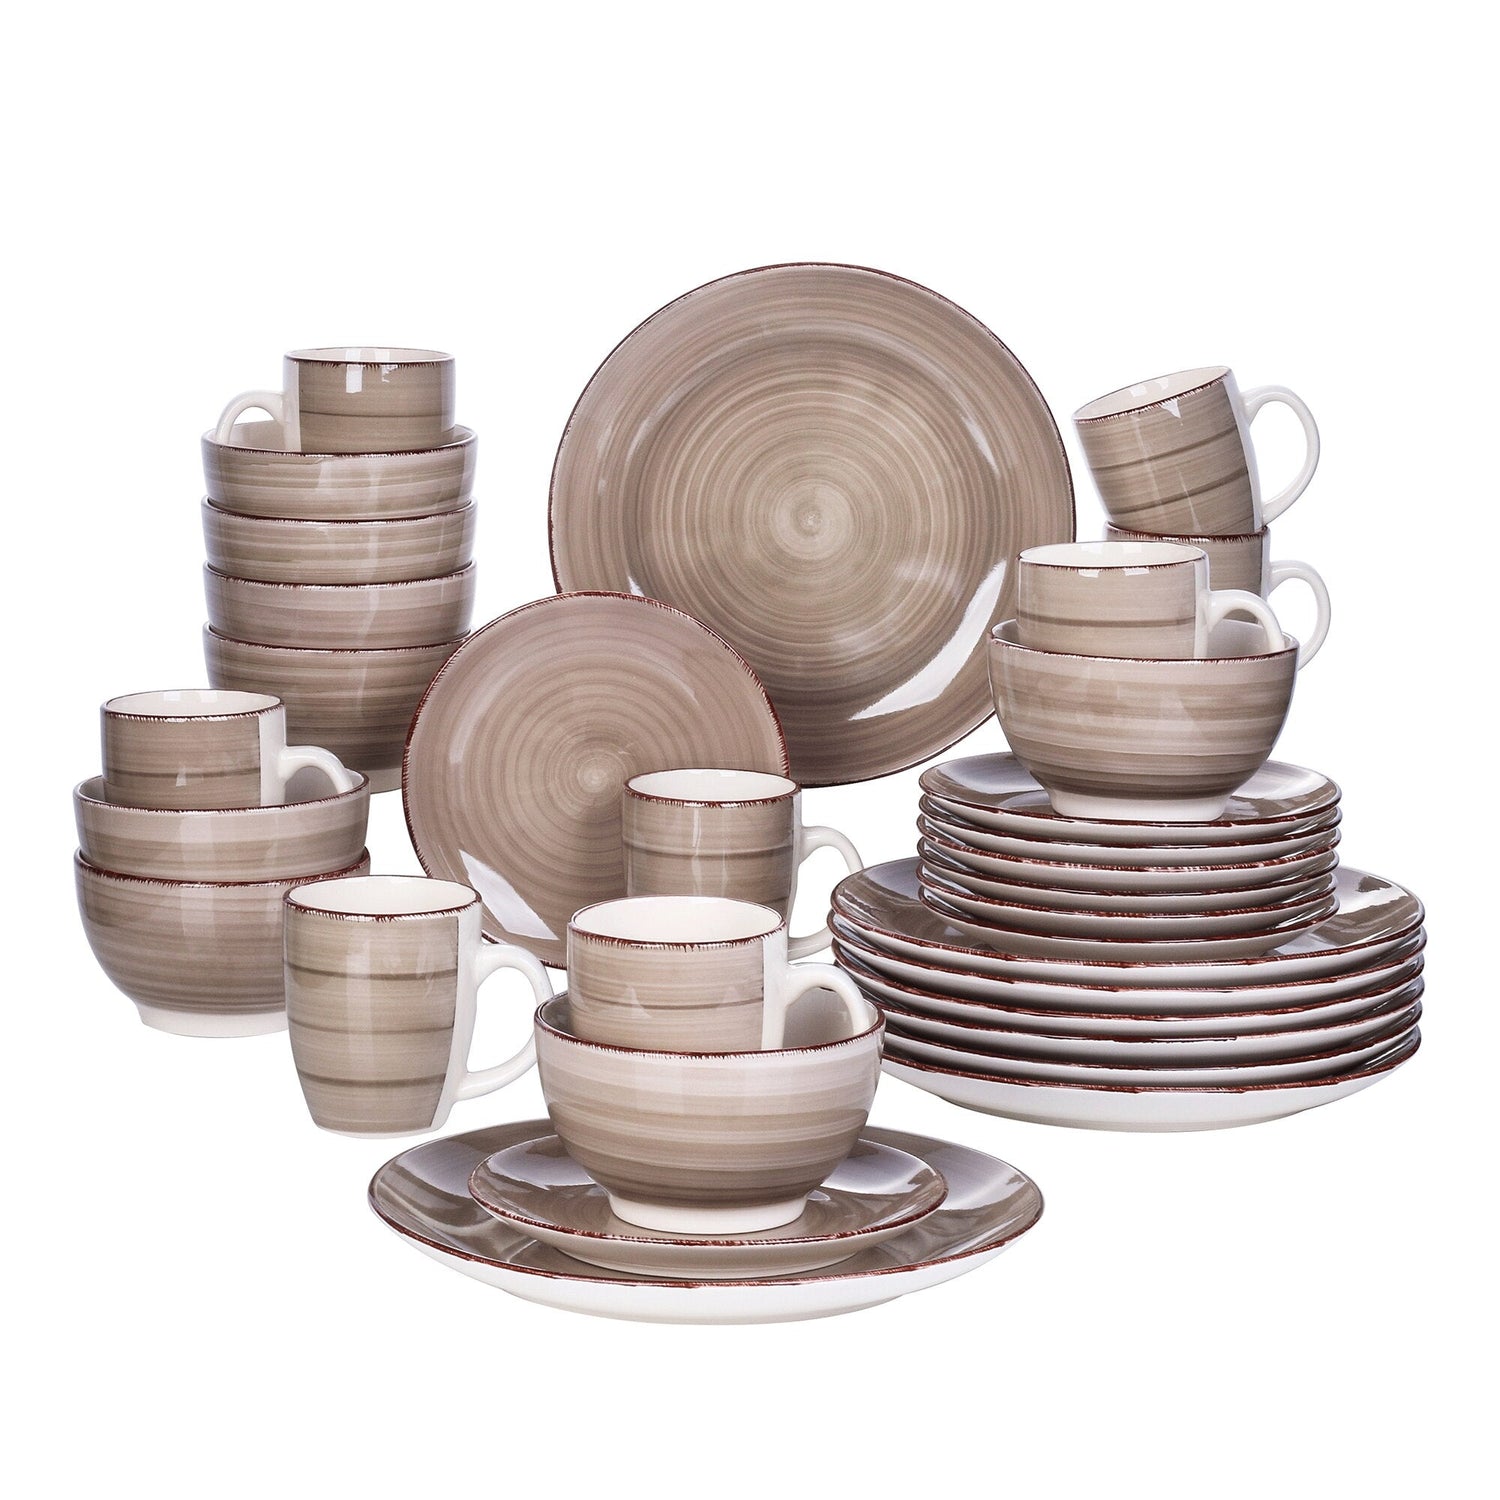 Bella-C 32-Pieces Porcelain Dinner Set - Nordic Side - 32, BellaC, Ceramic, Dinner, Look, Pieces, Plate, PlateBowlMug, PlateDessert, Porcelain, Set, Vancasso, Vintage, with